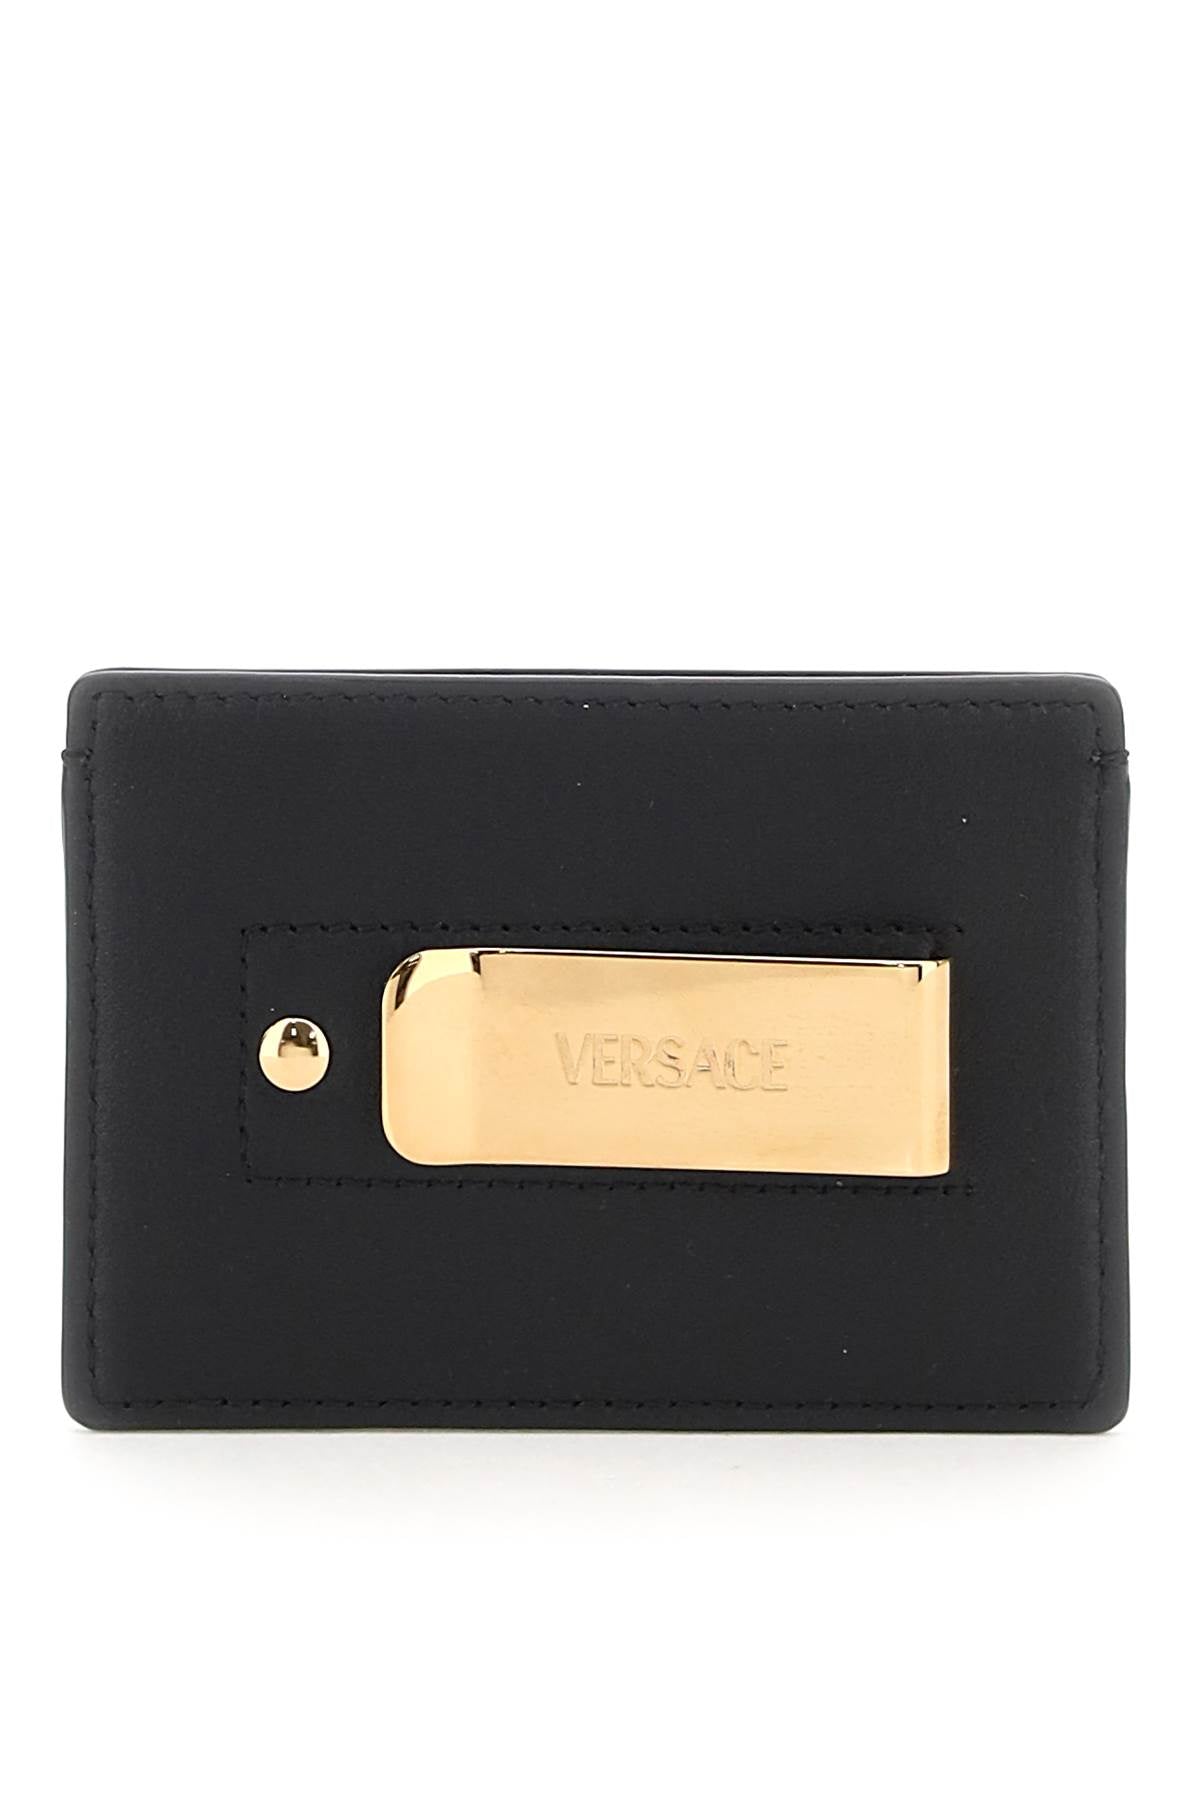 Versace Versace leather medusa cardholder